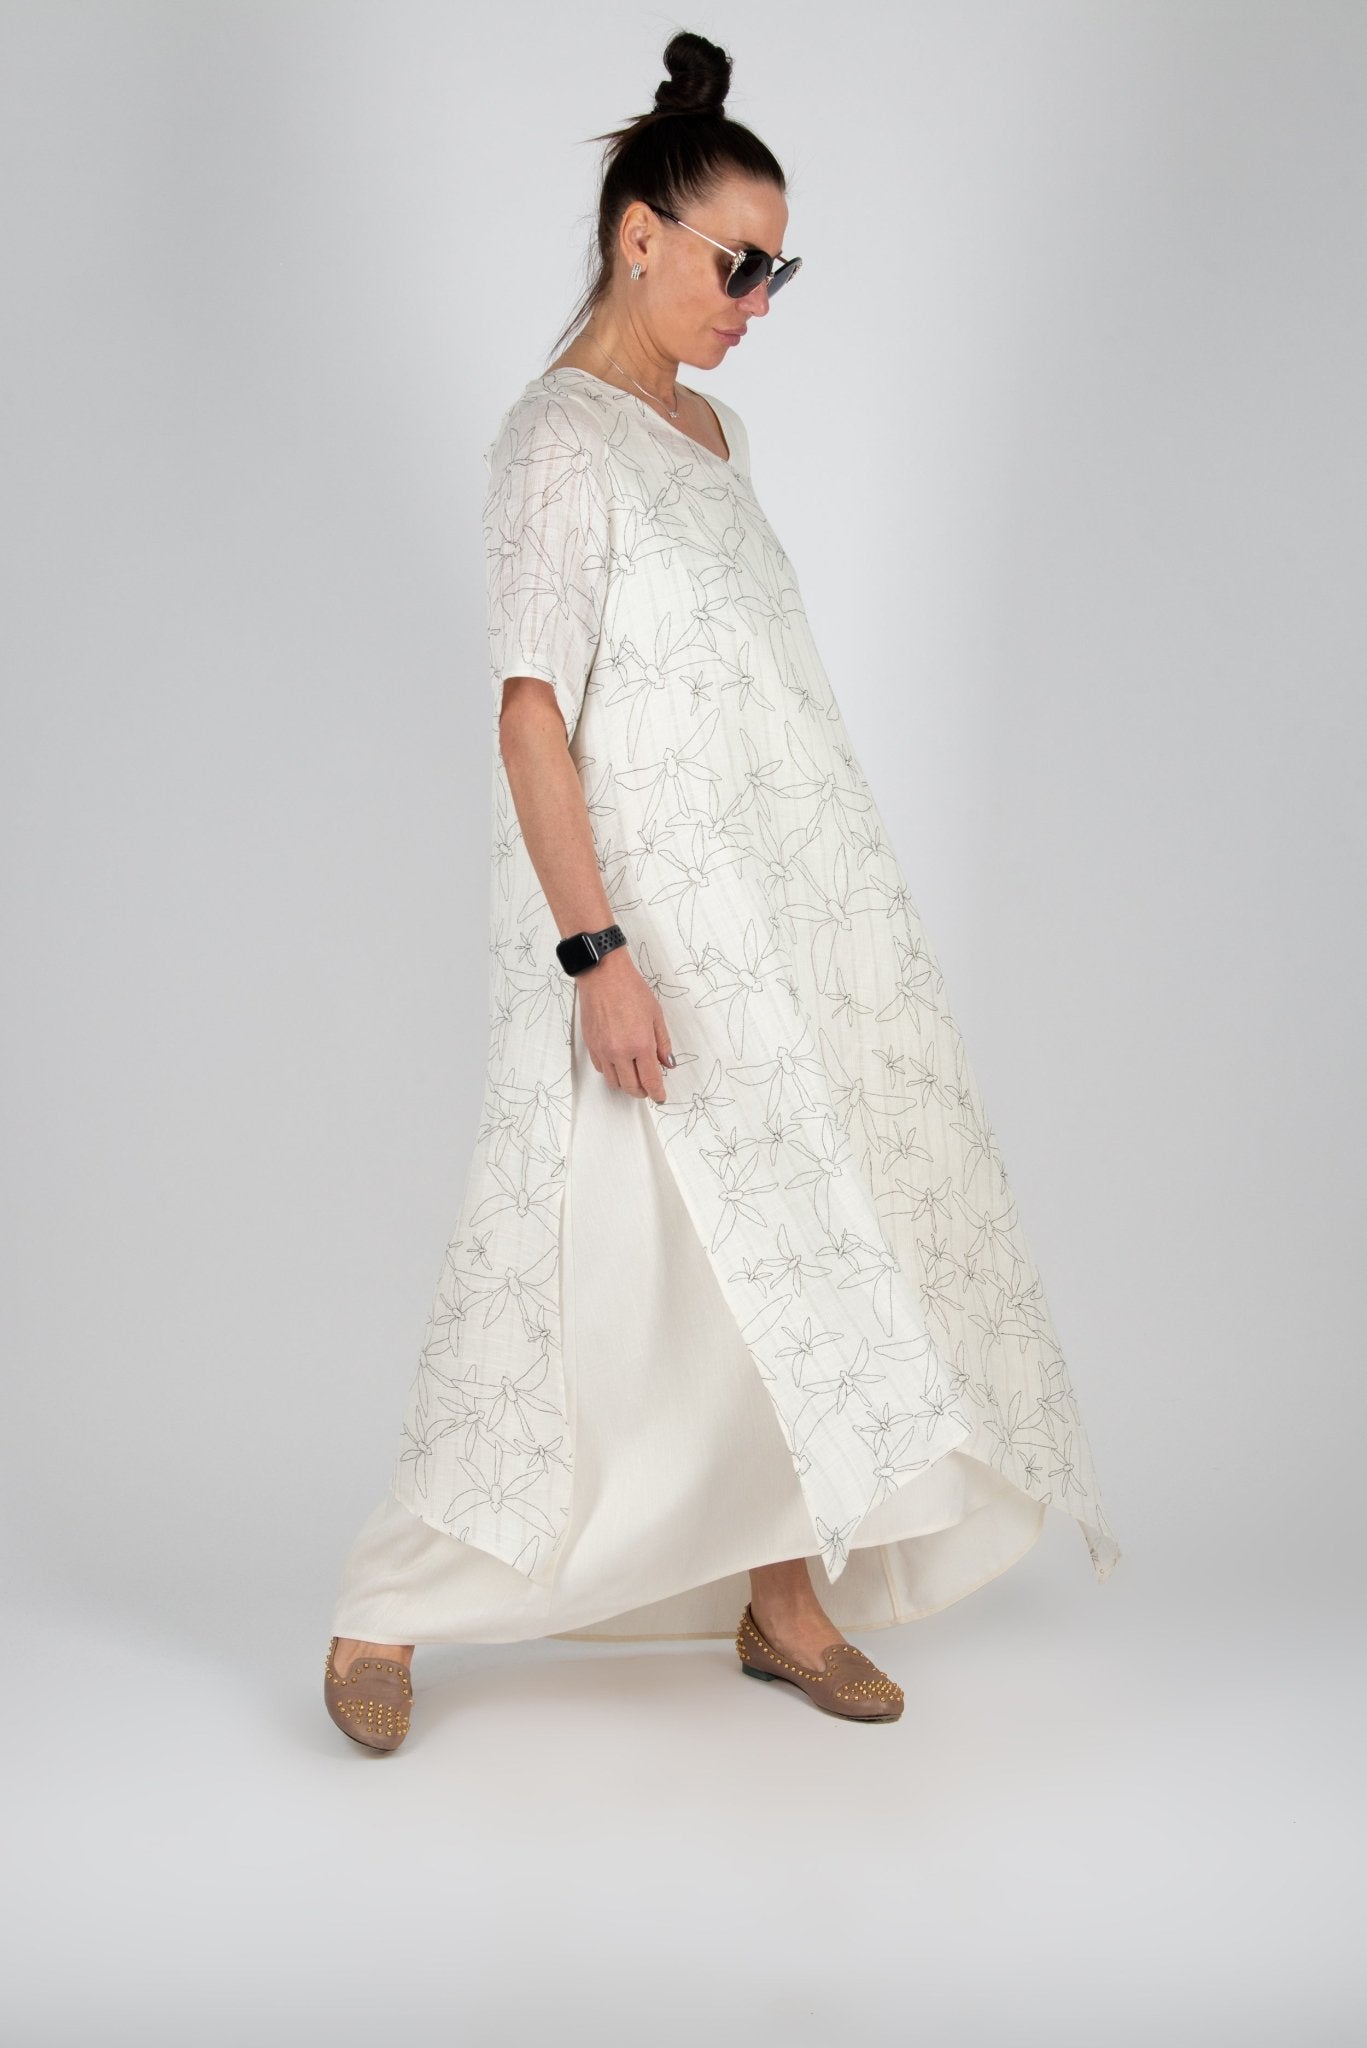 Linen Dress in 2 parts LORI - EUG FASHION EugFashion 